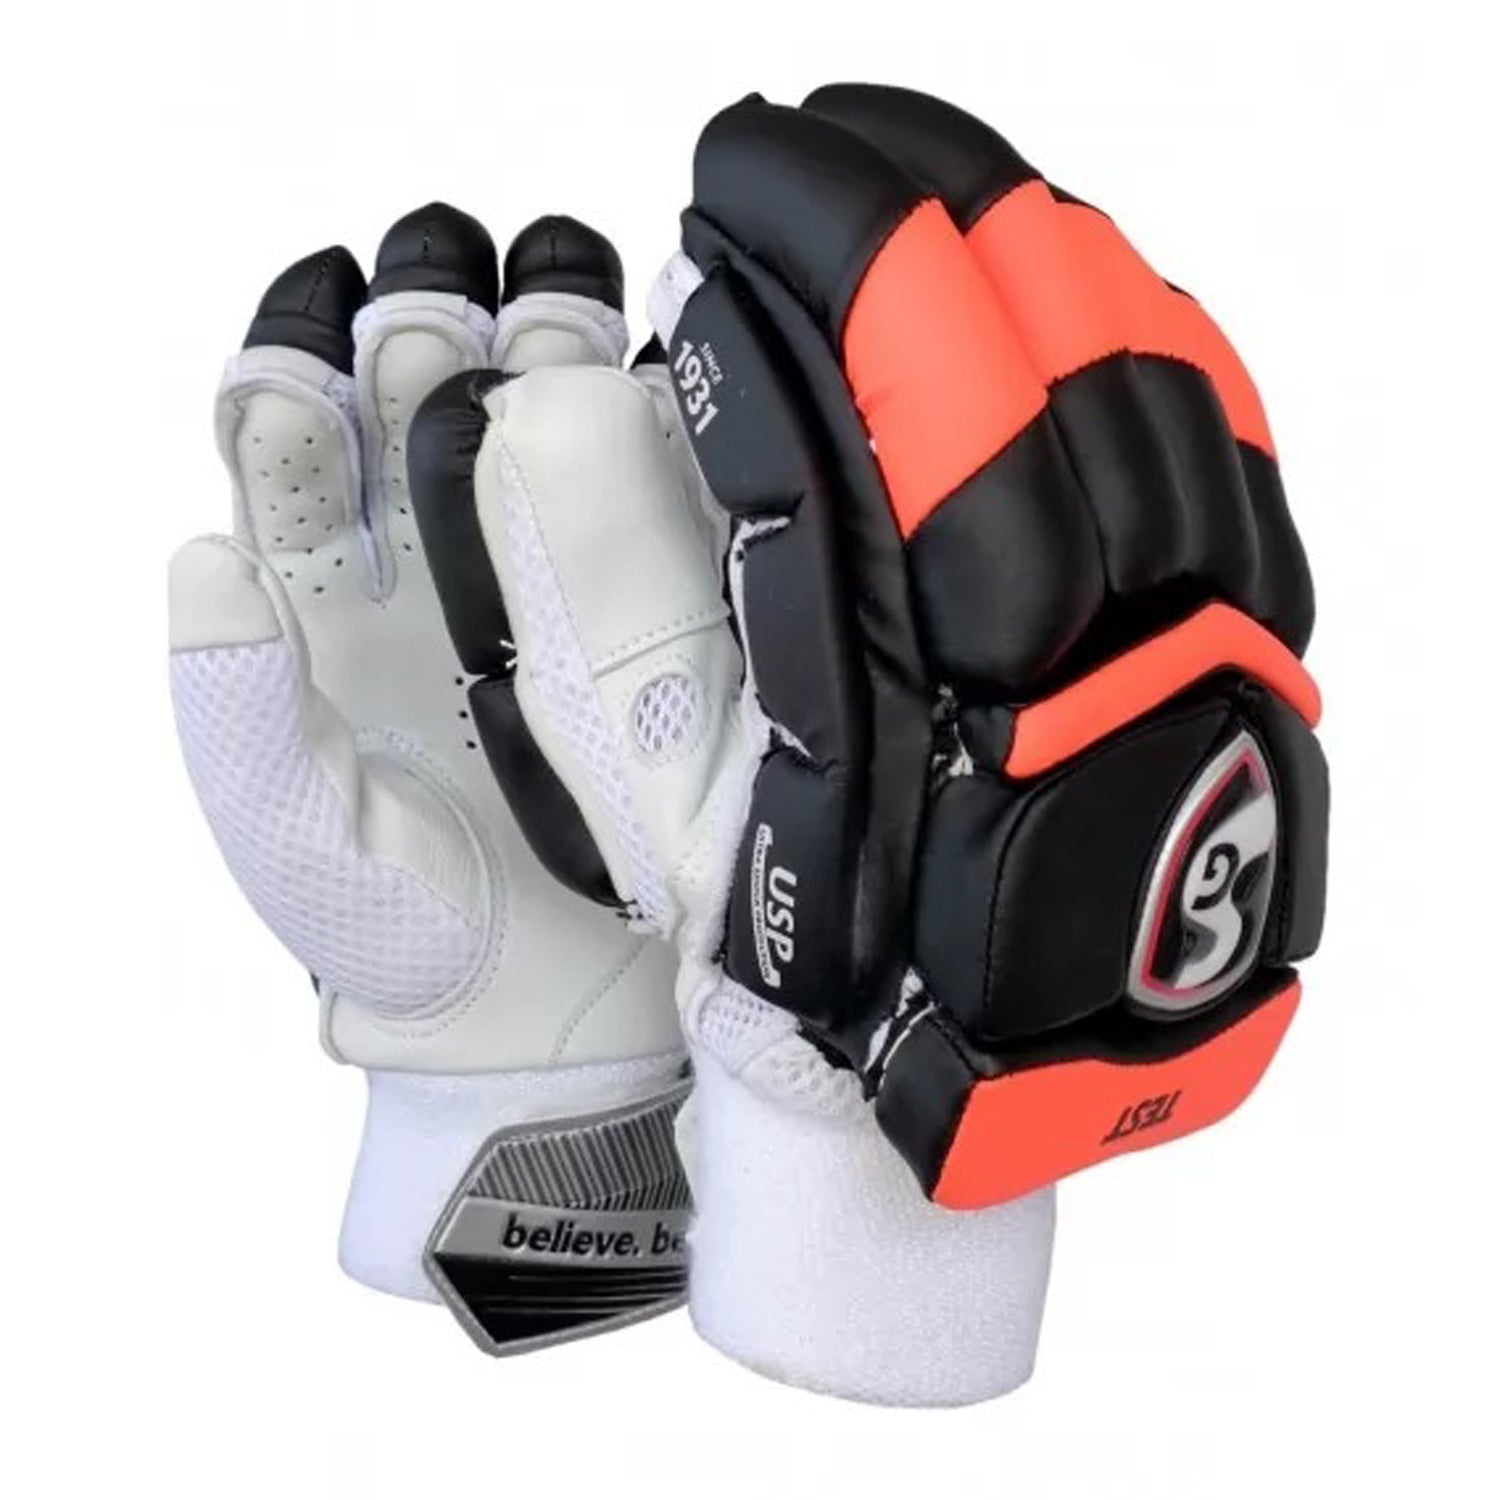 SG Test SRH Batting Gloves - Left Hand, Black/Orange - Best Price online Prokicksports.com